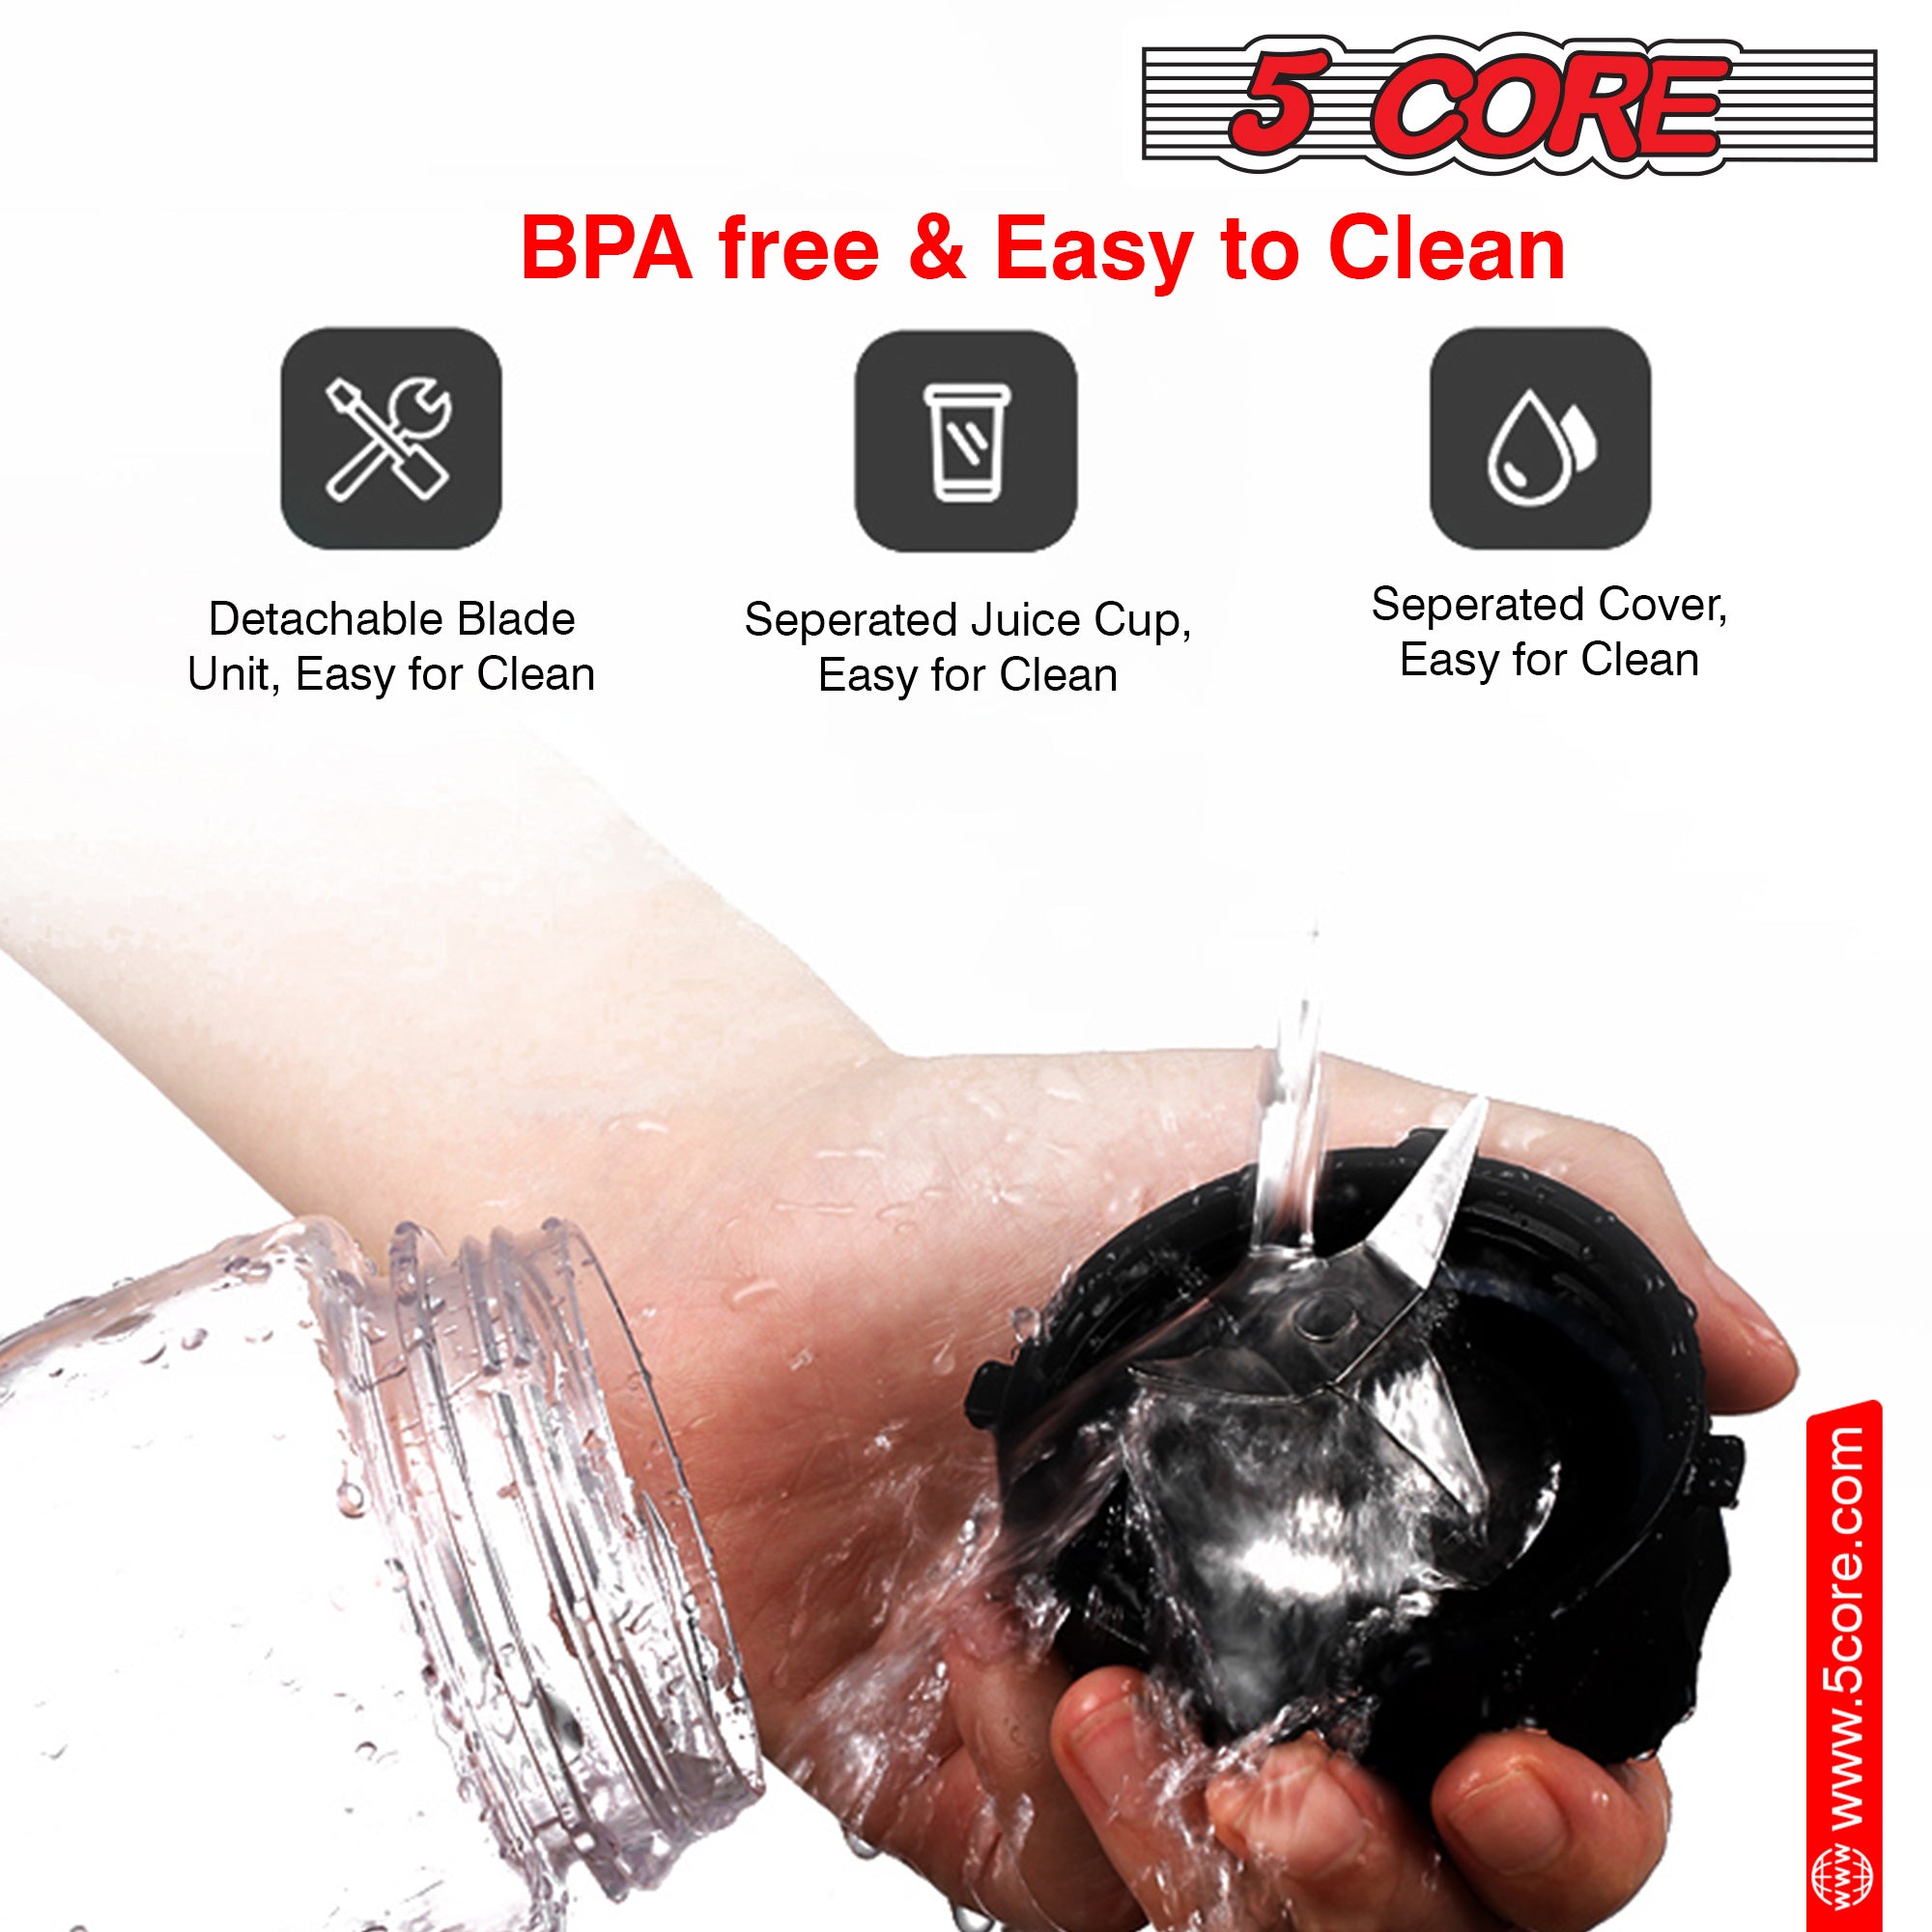 bpa free & easy to clean personal blender